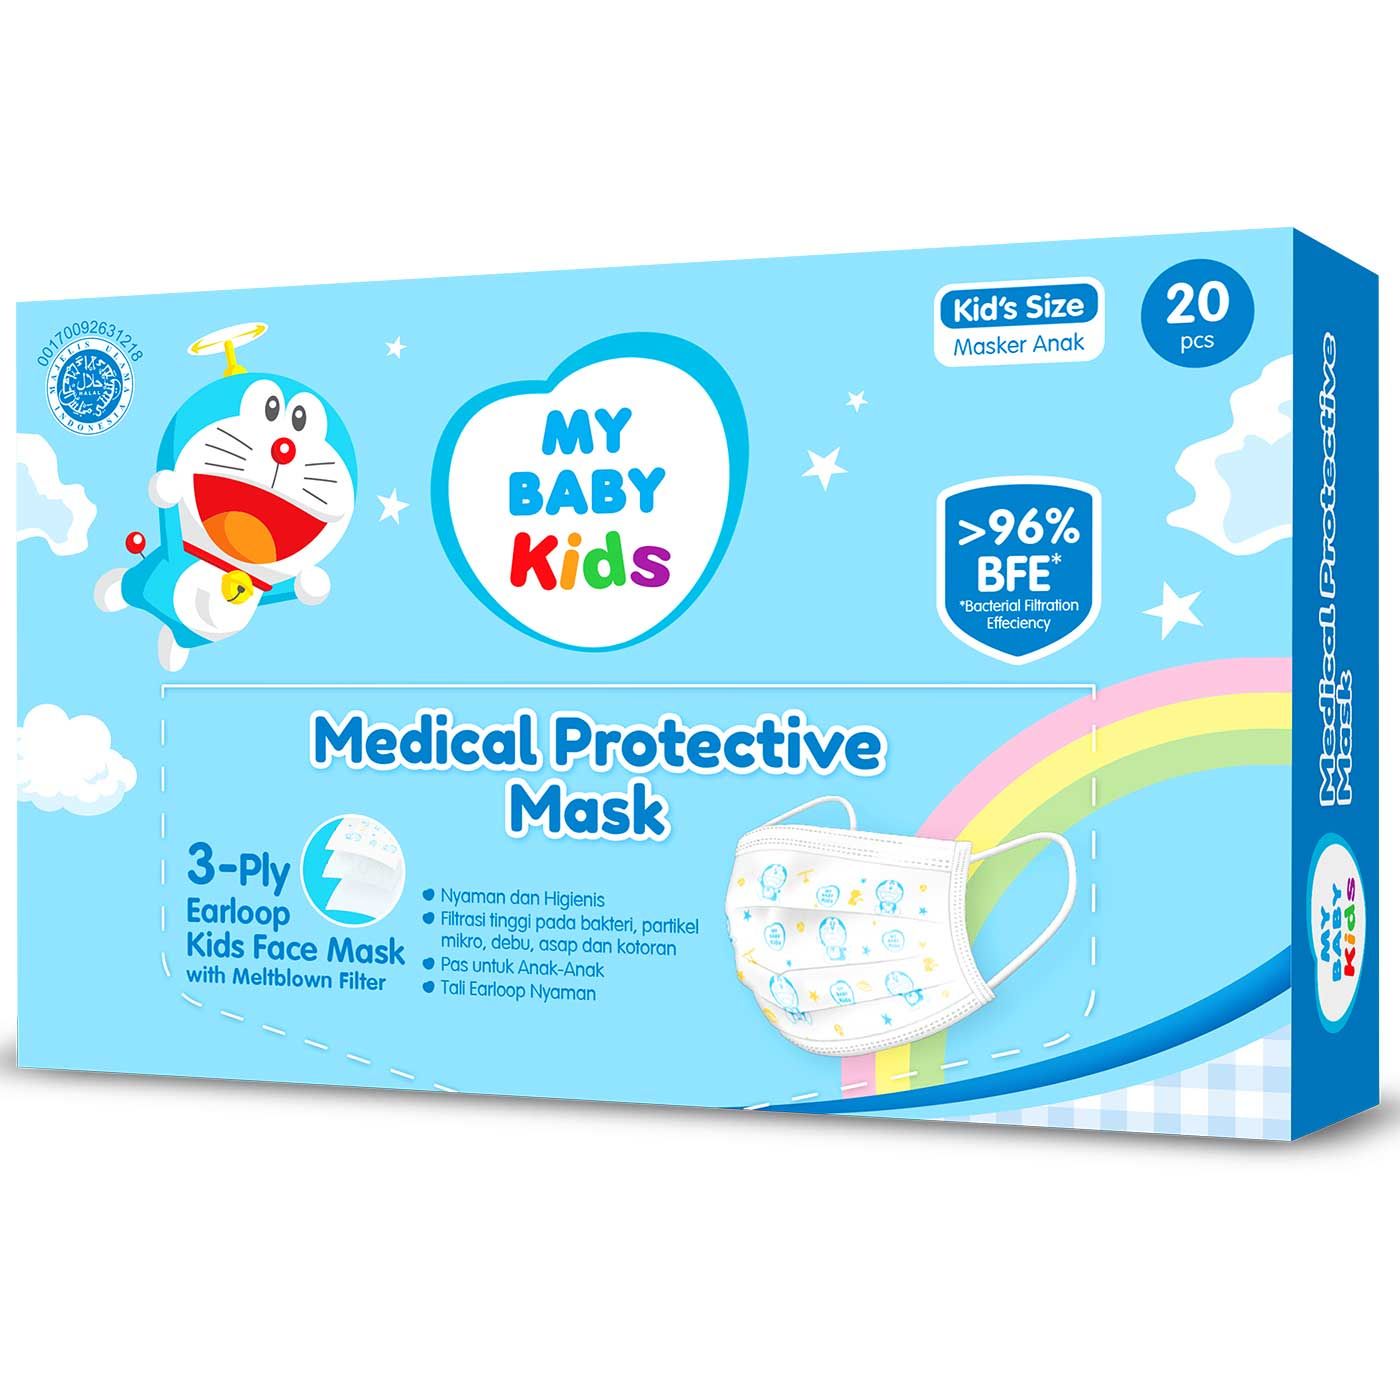 MY BABY Kids Medical Protective Mask 20 pcs - 2